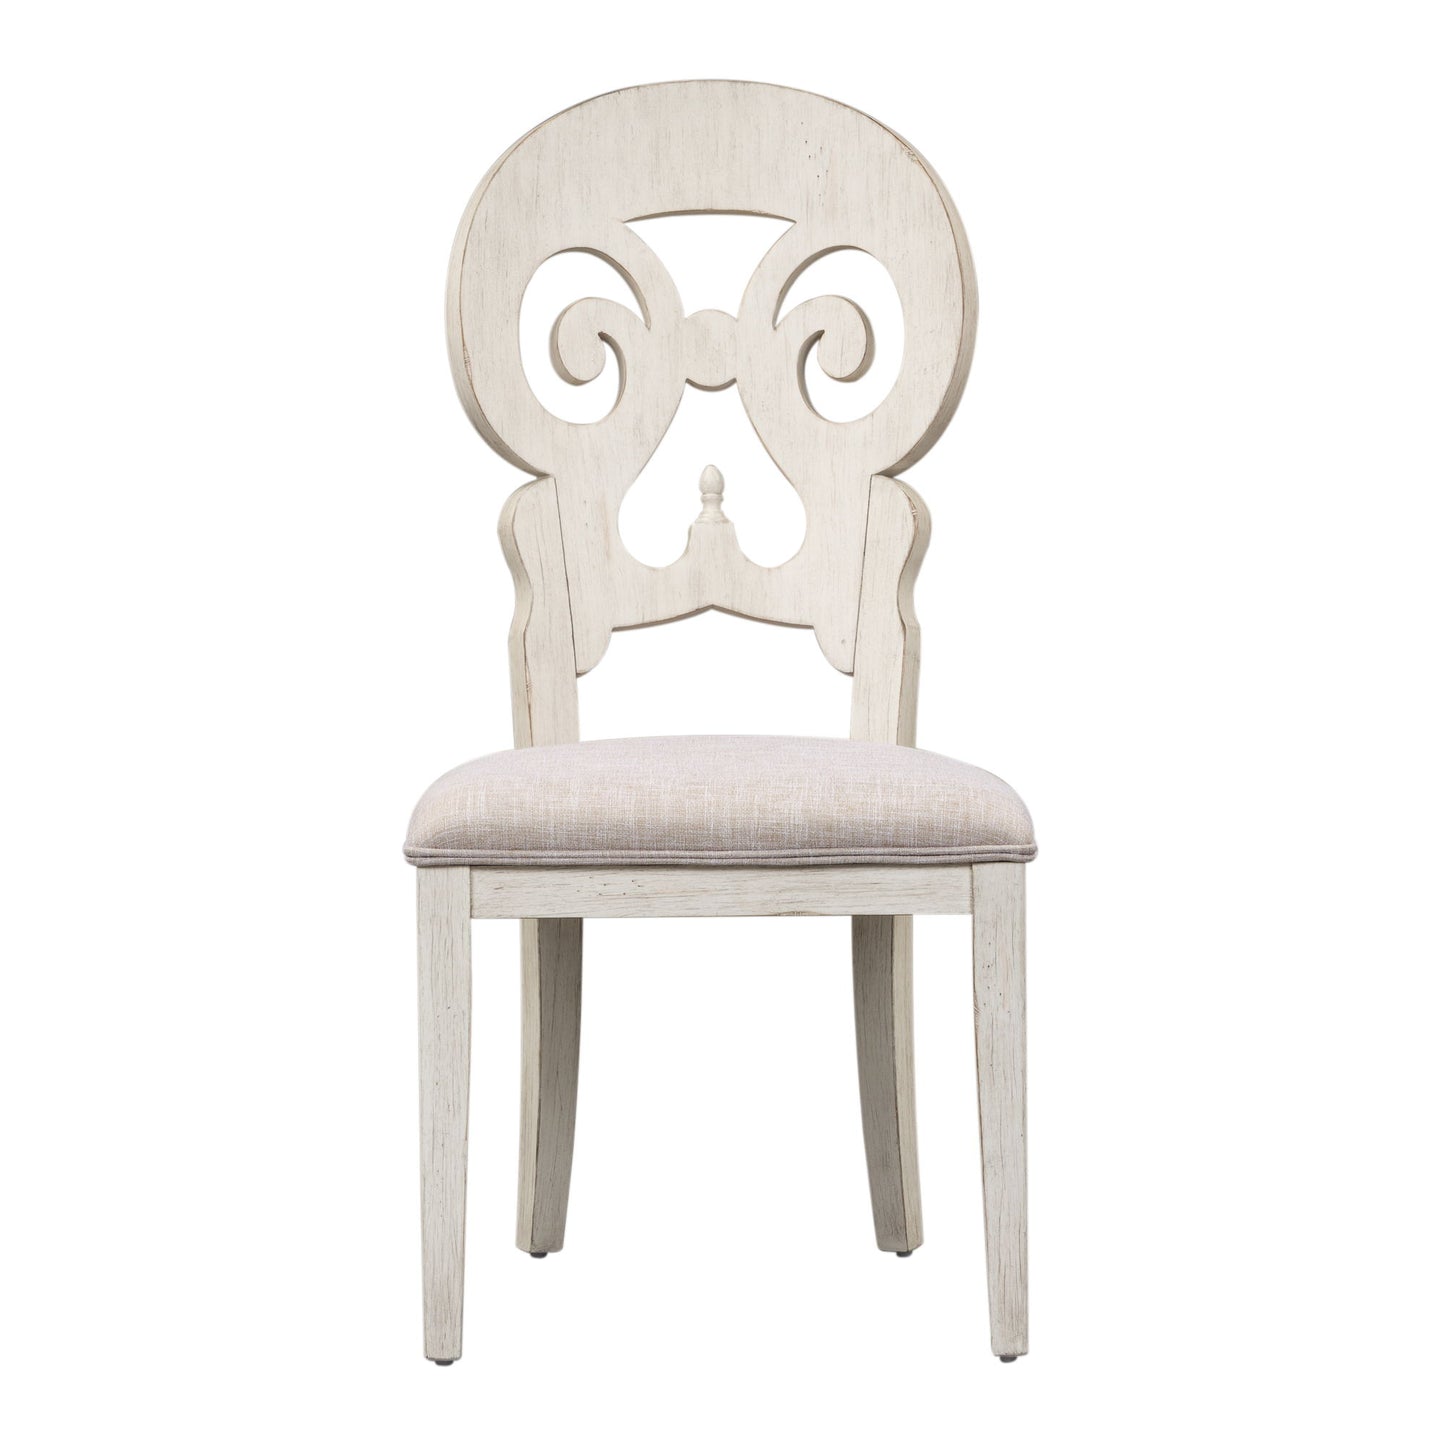 Farmhouse Reimagined - Splat Back Side Chair - White